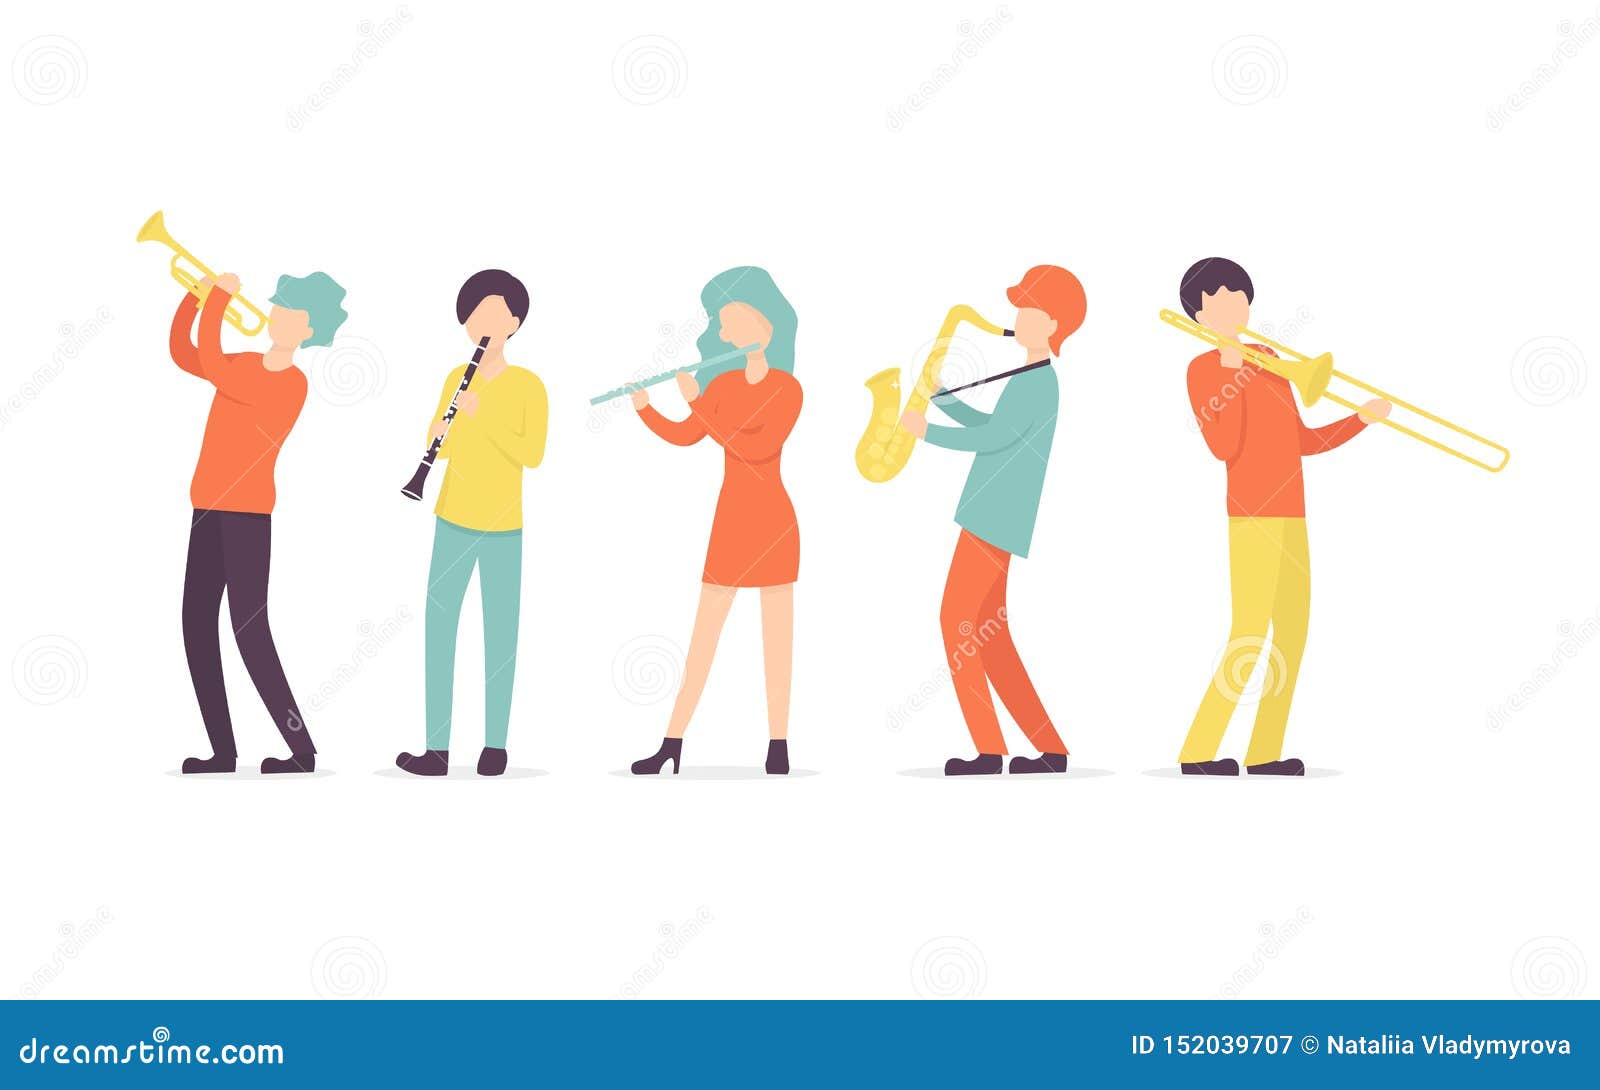 clarinete, saxophone, trumpet, flute and trombon